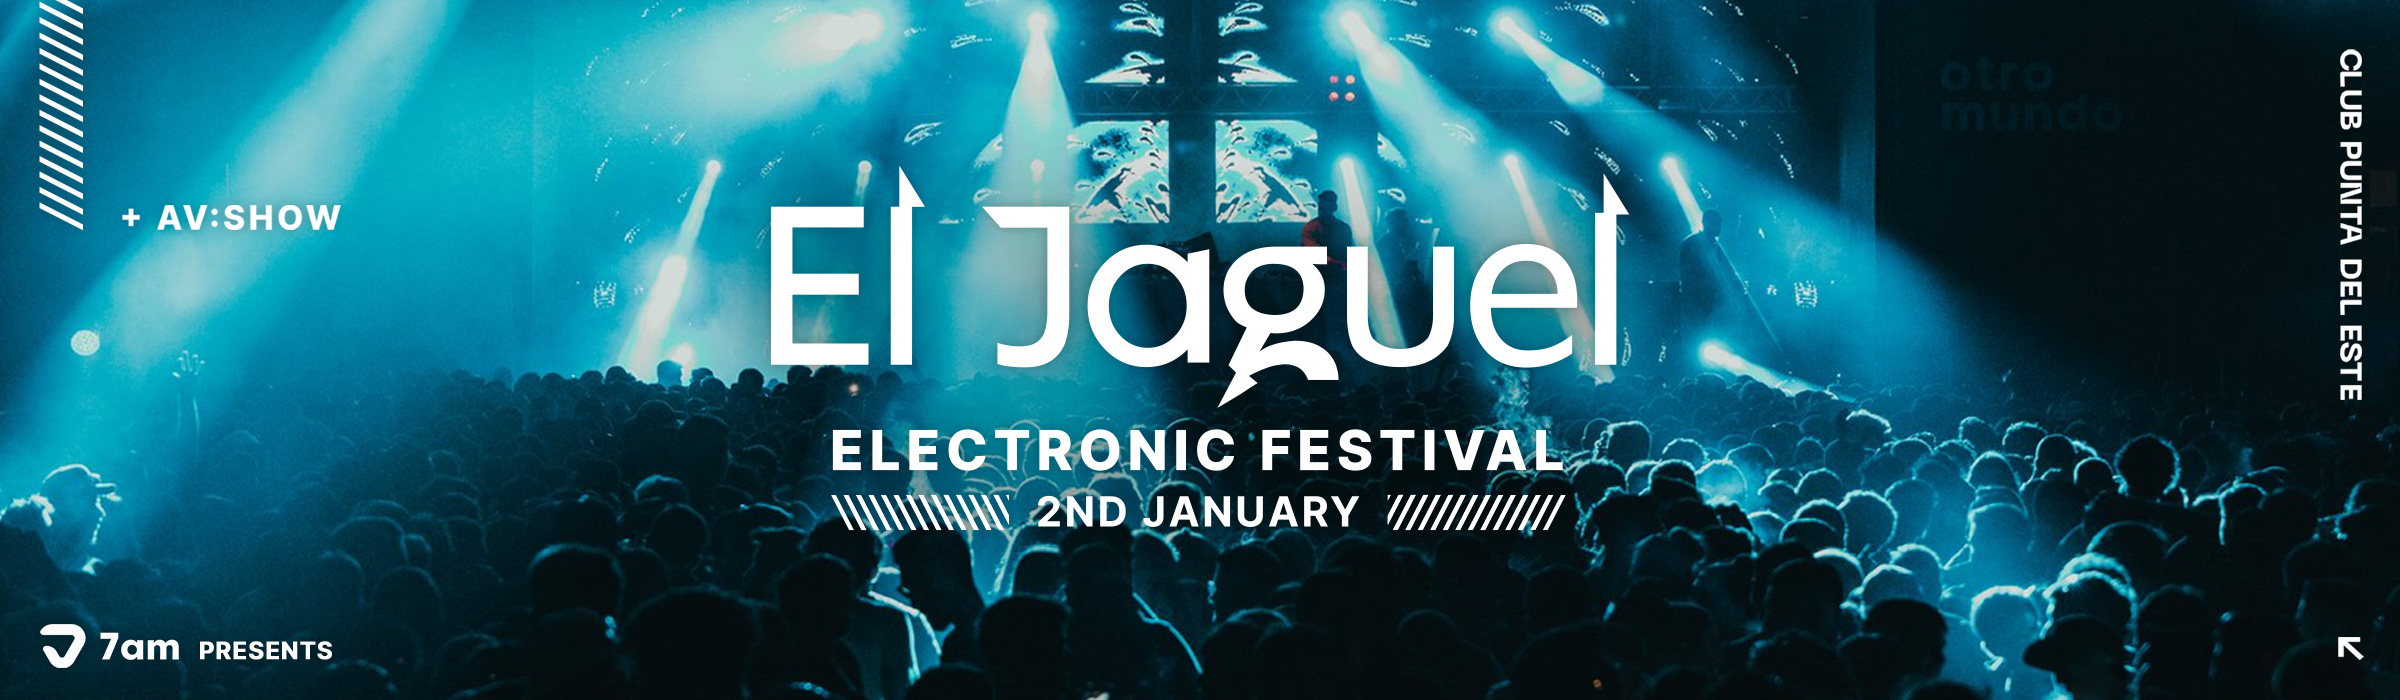 El Jaguel Electronic Festival